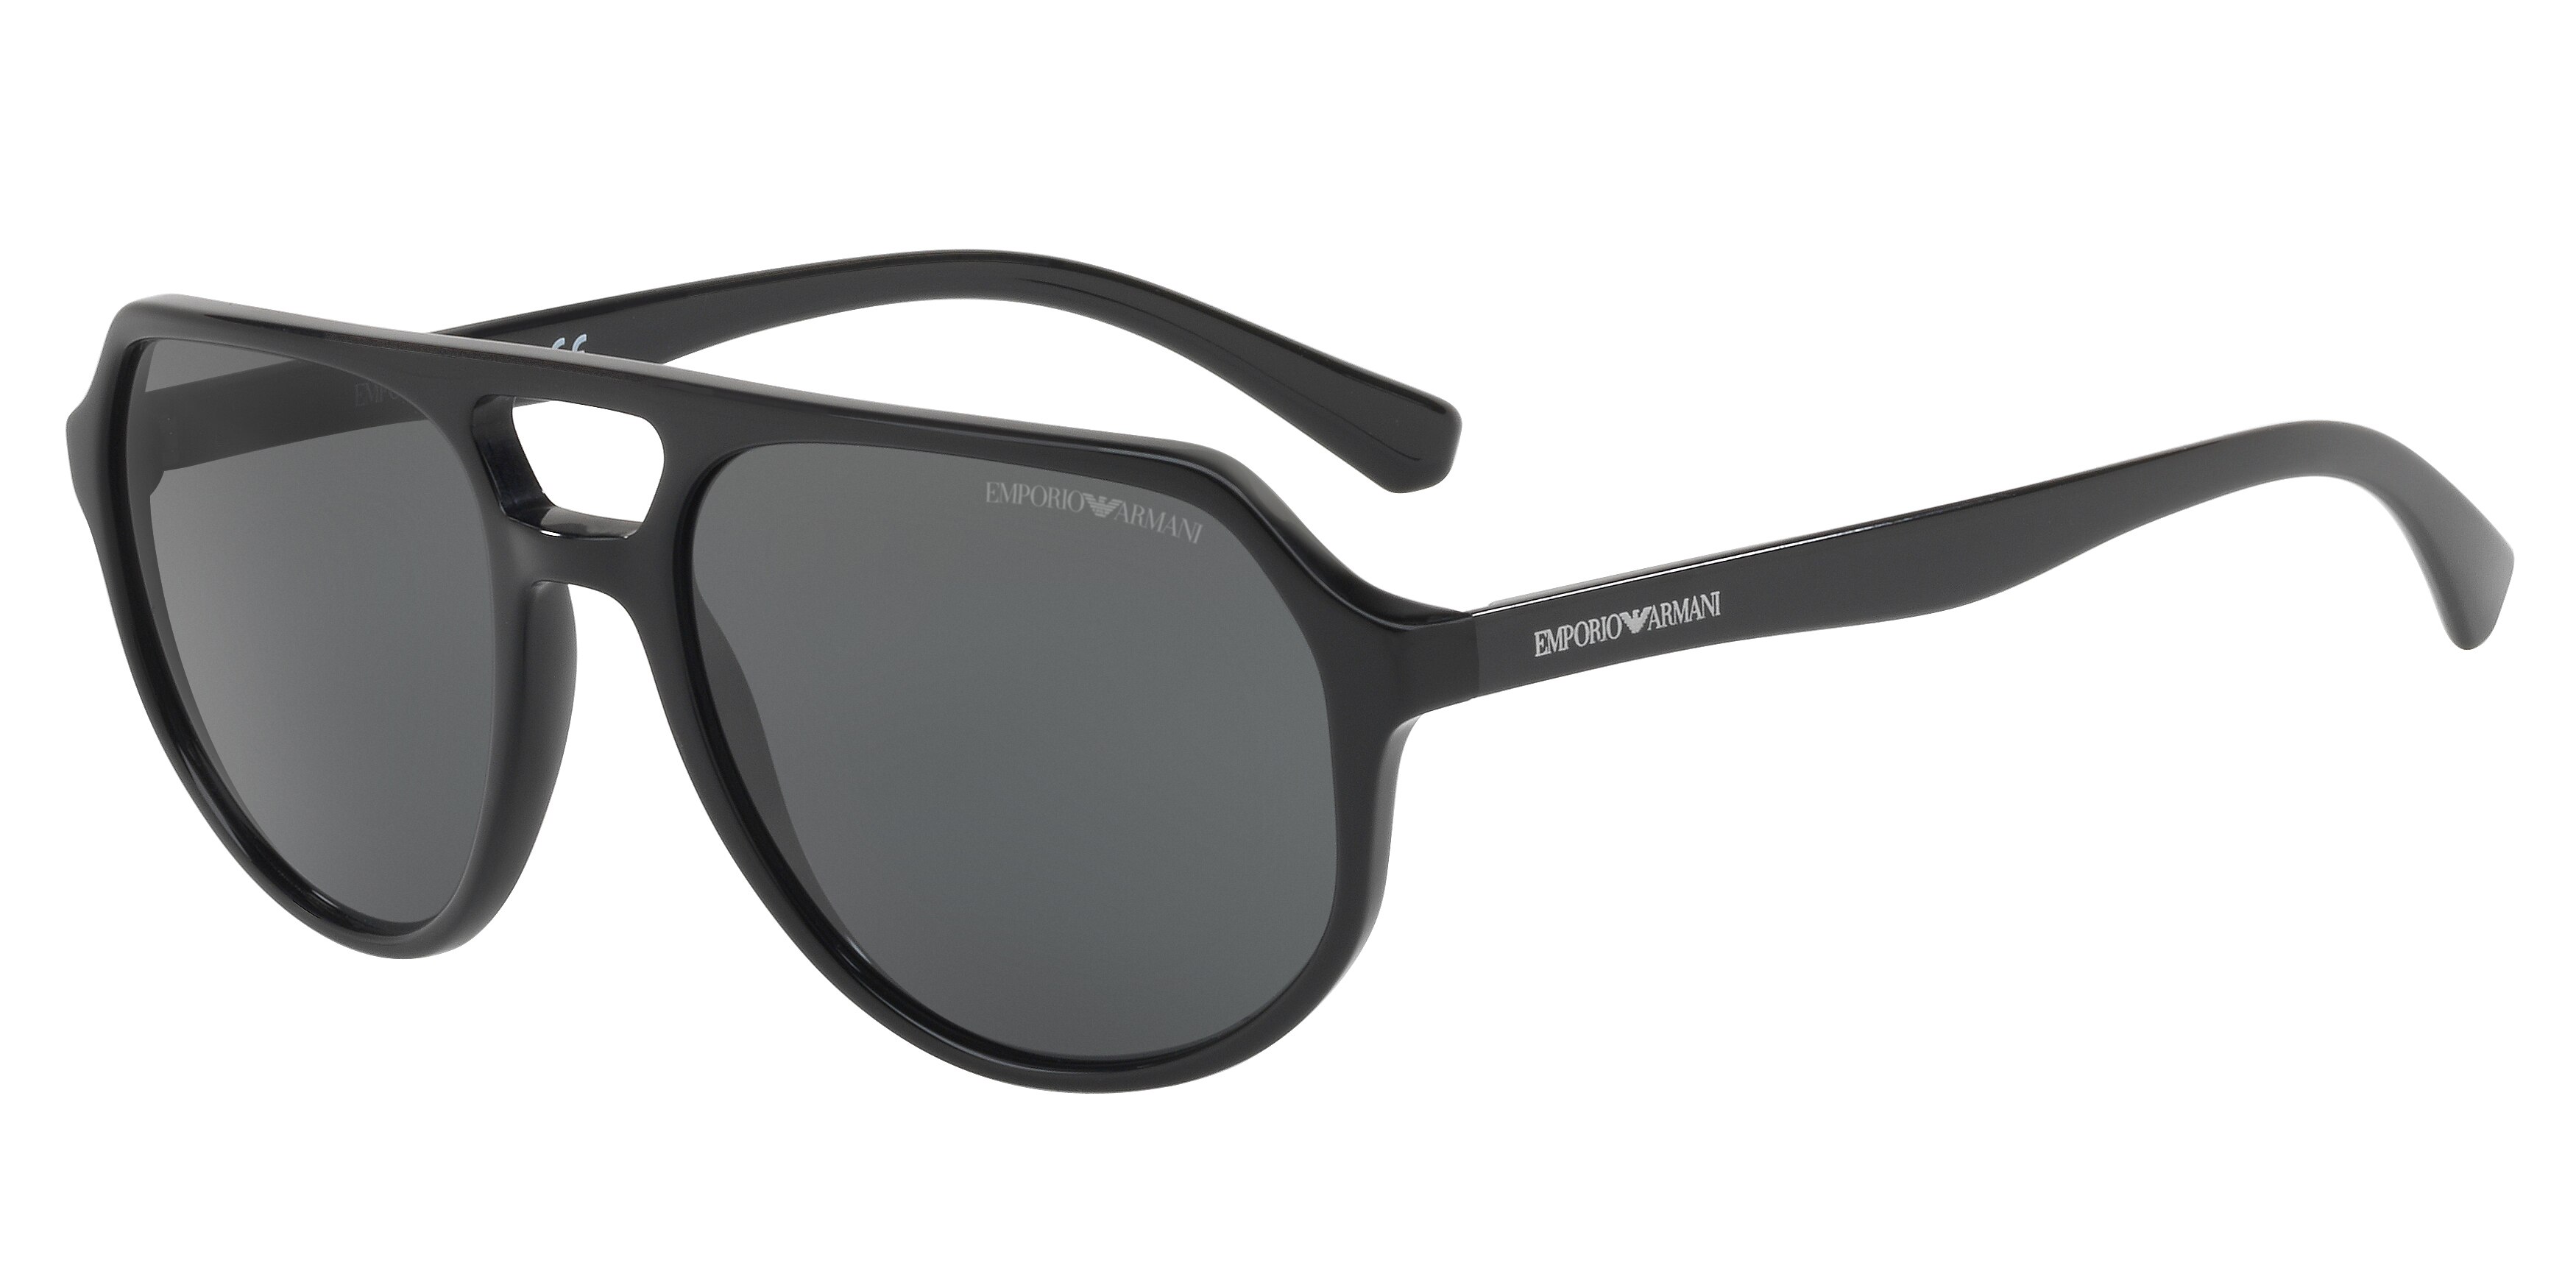 Buy Emporio Armani Sunglasses directly from OpticsFast.com